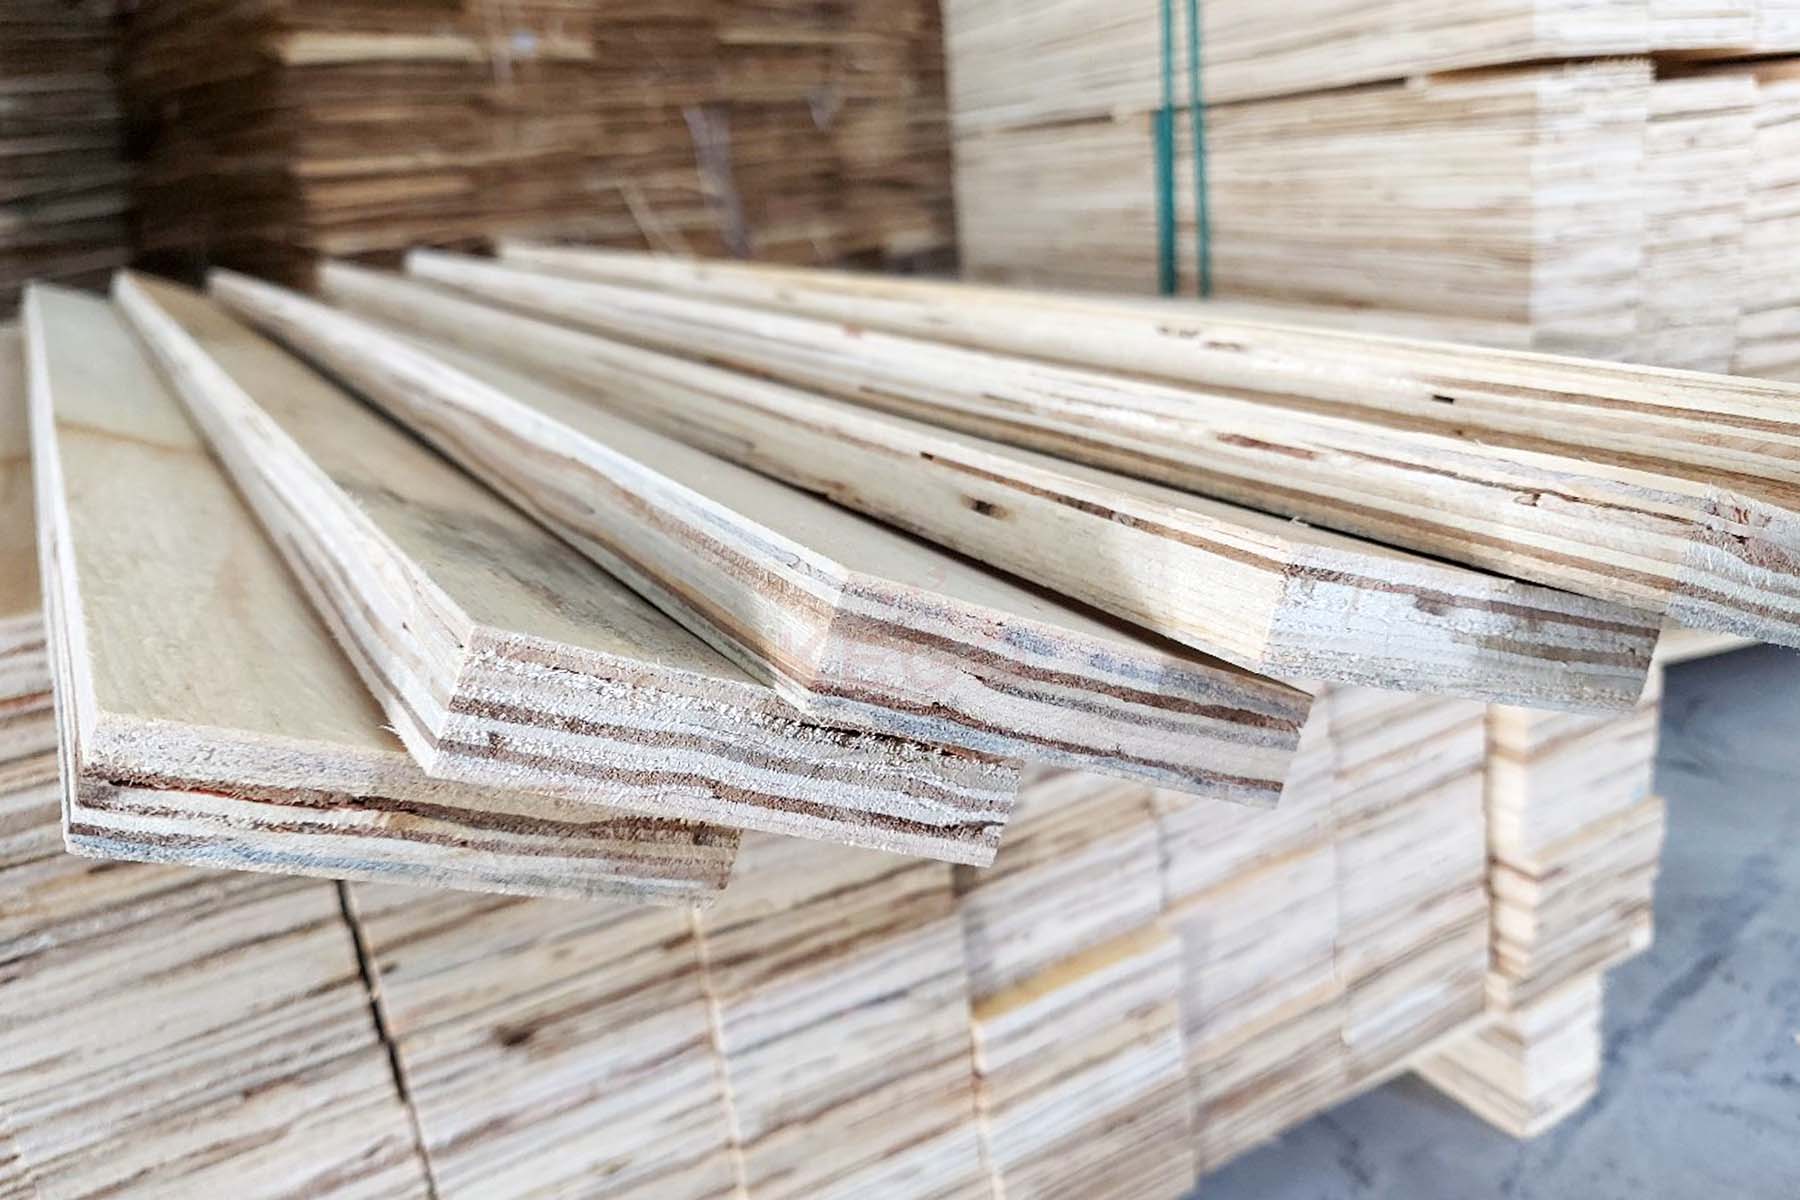 https://kego.com.vn/wp-content/uploads/2015/09/laminated-veneer-lumber-lvl-kego-6.jpg